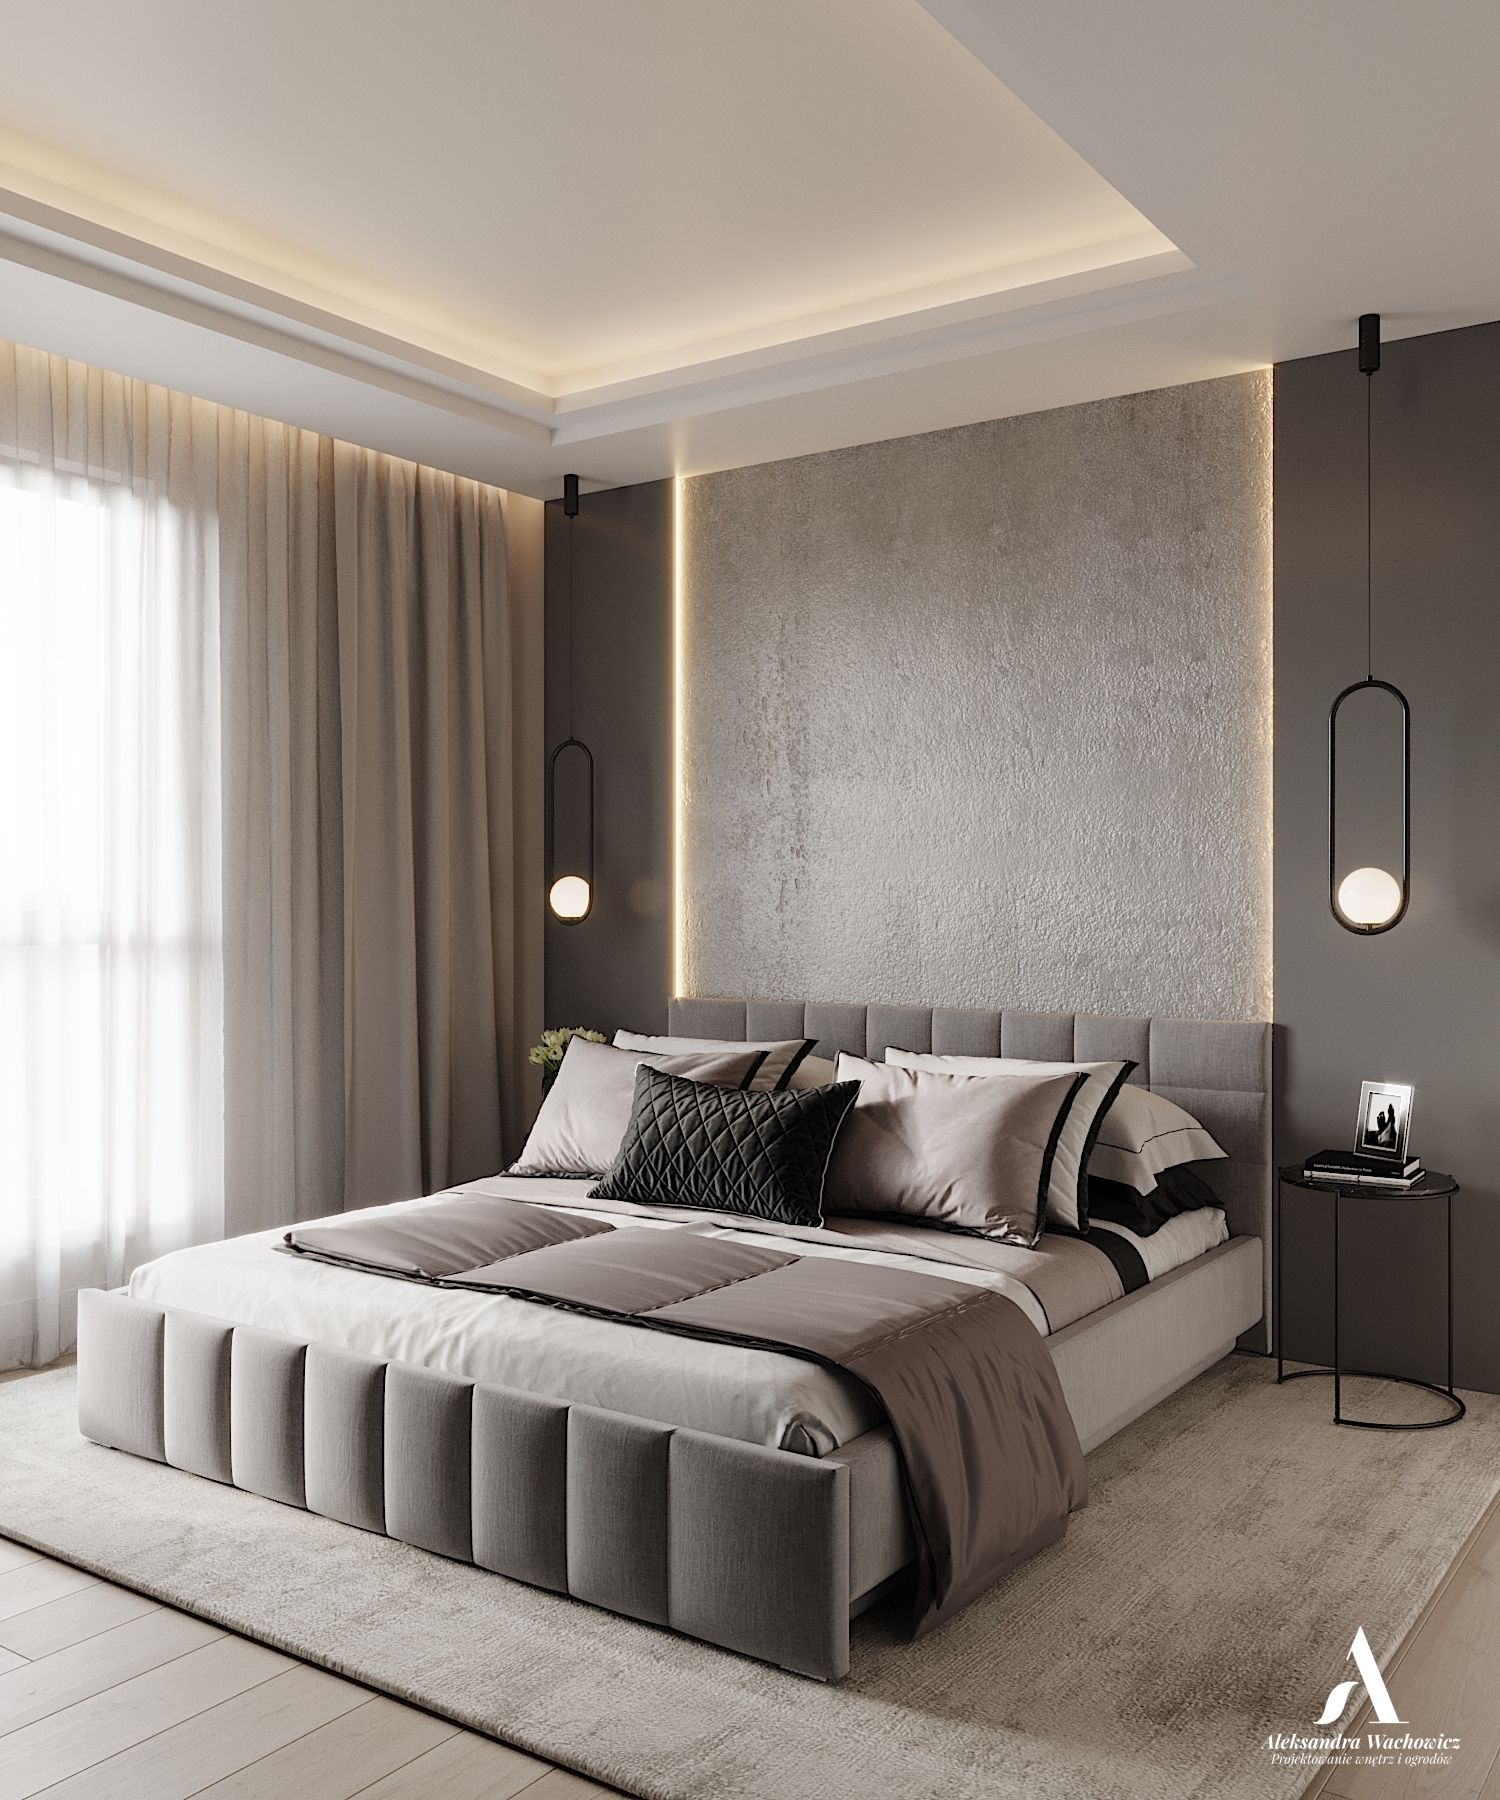  bedroom interior decoration , 3-D bedroom interior design, Master bedroom interior decoration